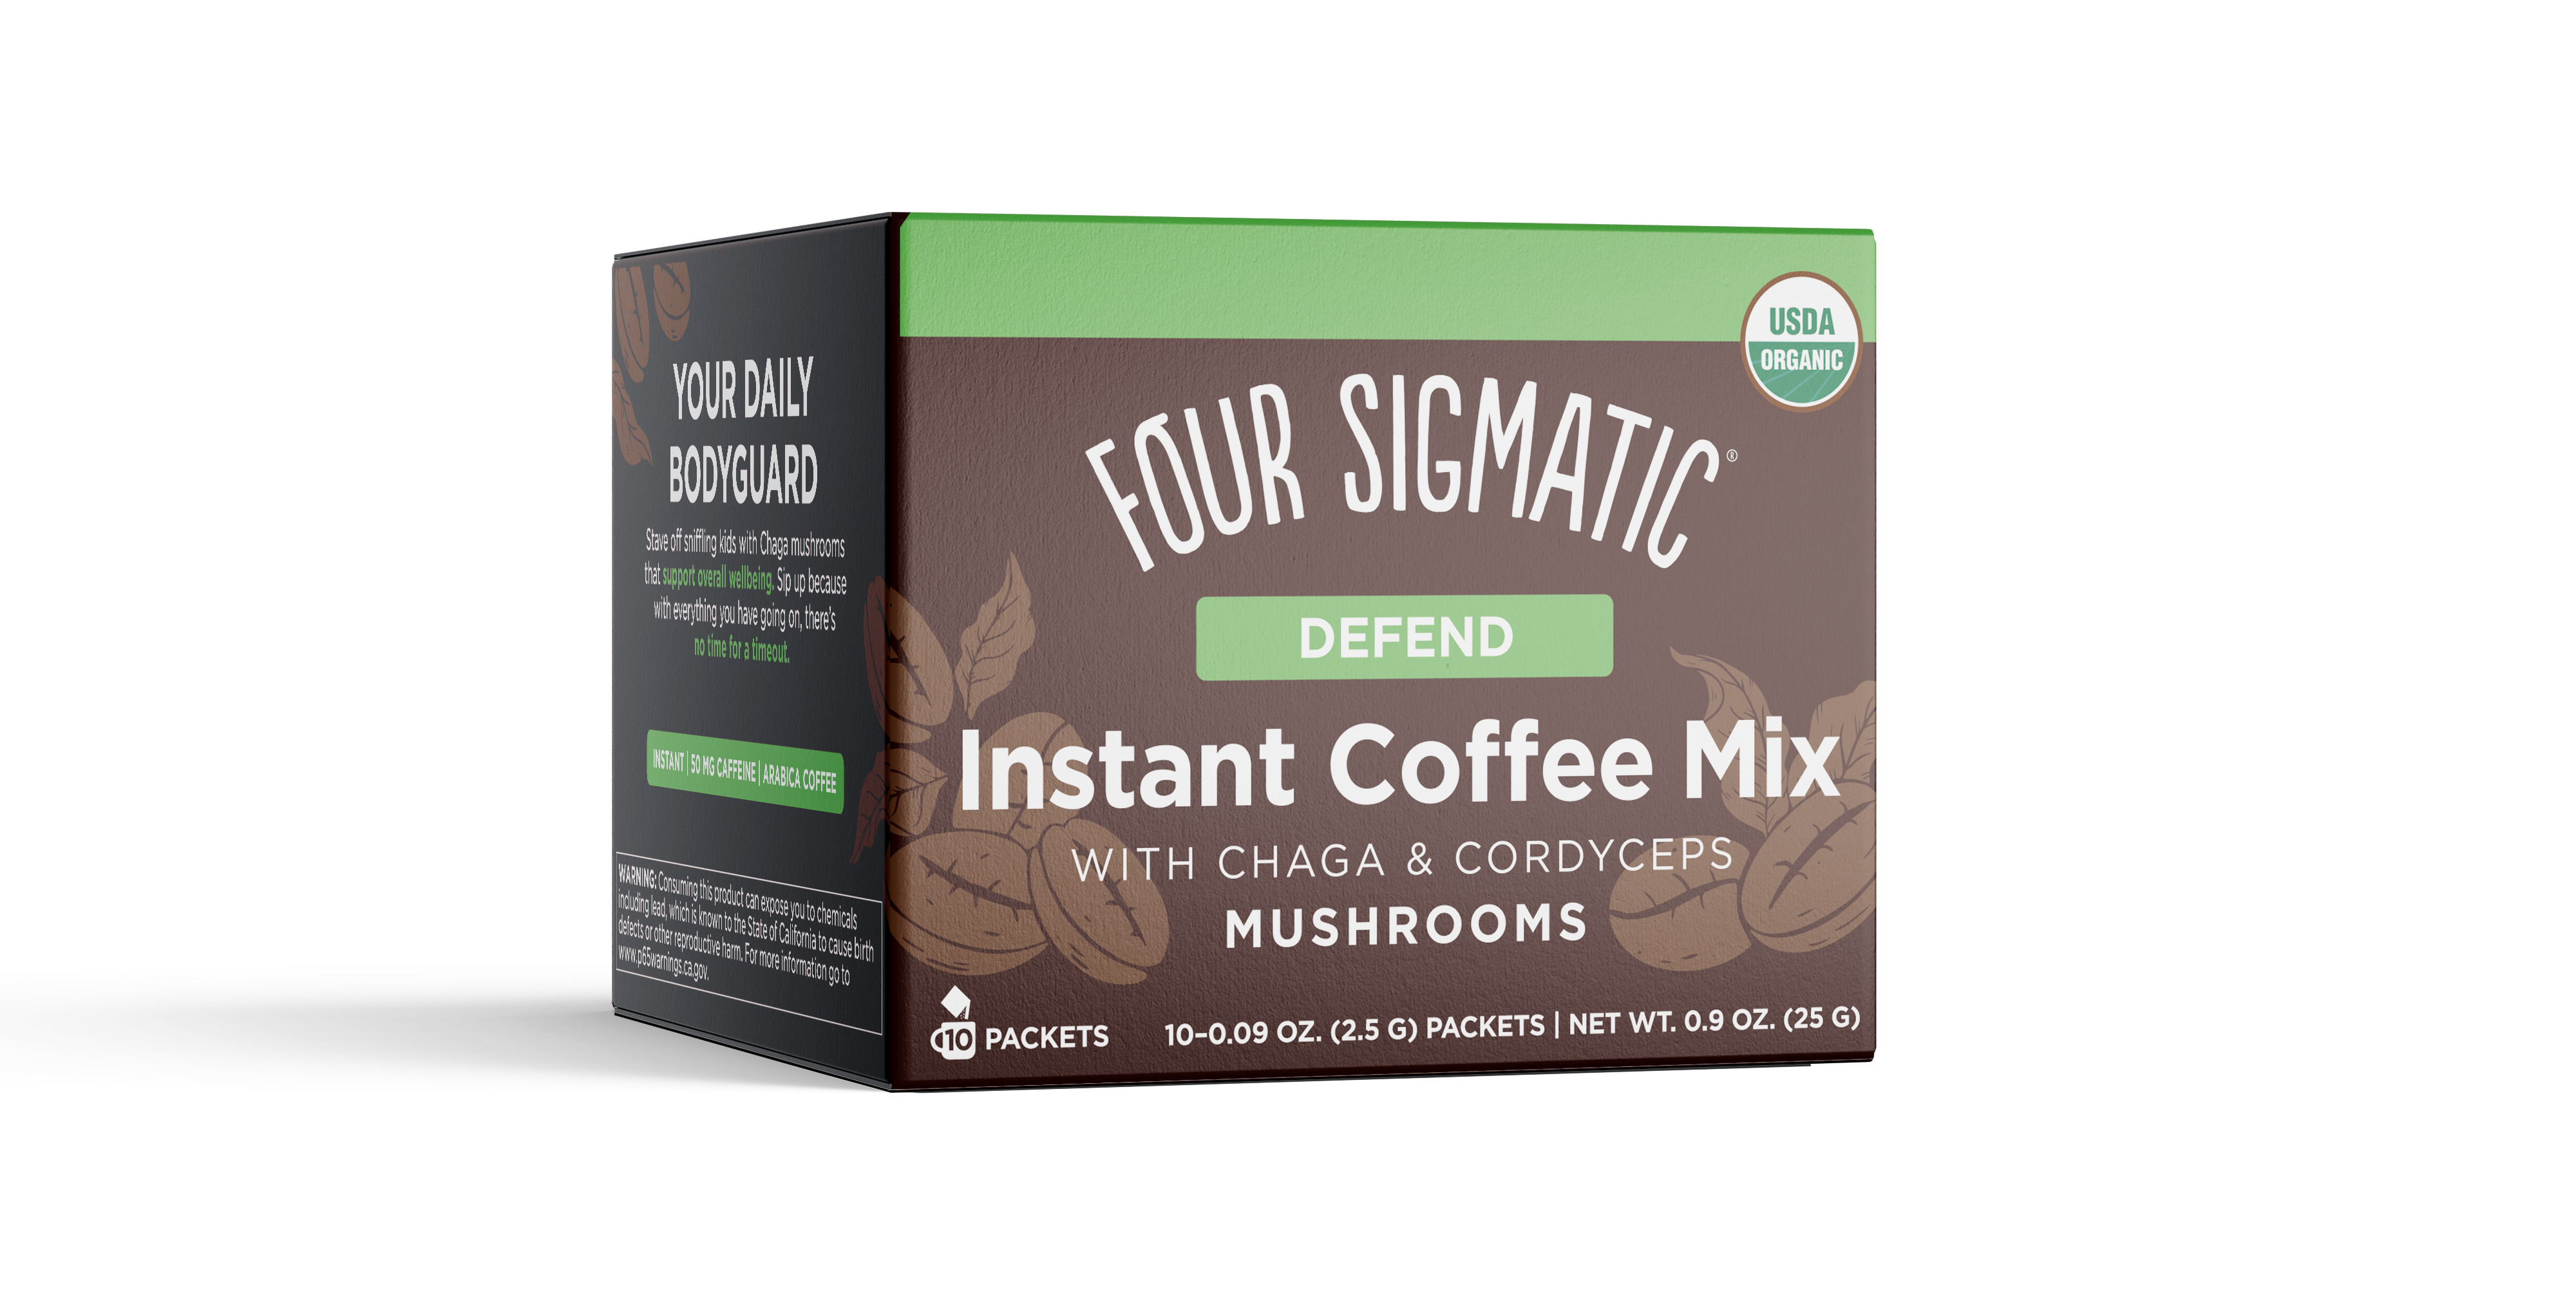 Four Sigmatic Defend Mushroom Coffee Mix with Chaga 10ct Box 144 units per case 0.1 oz